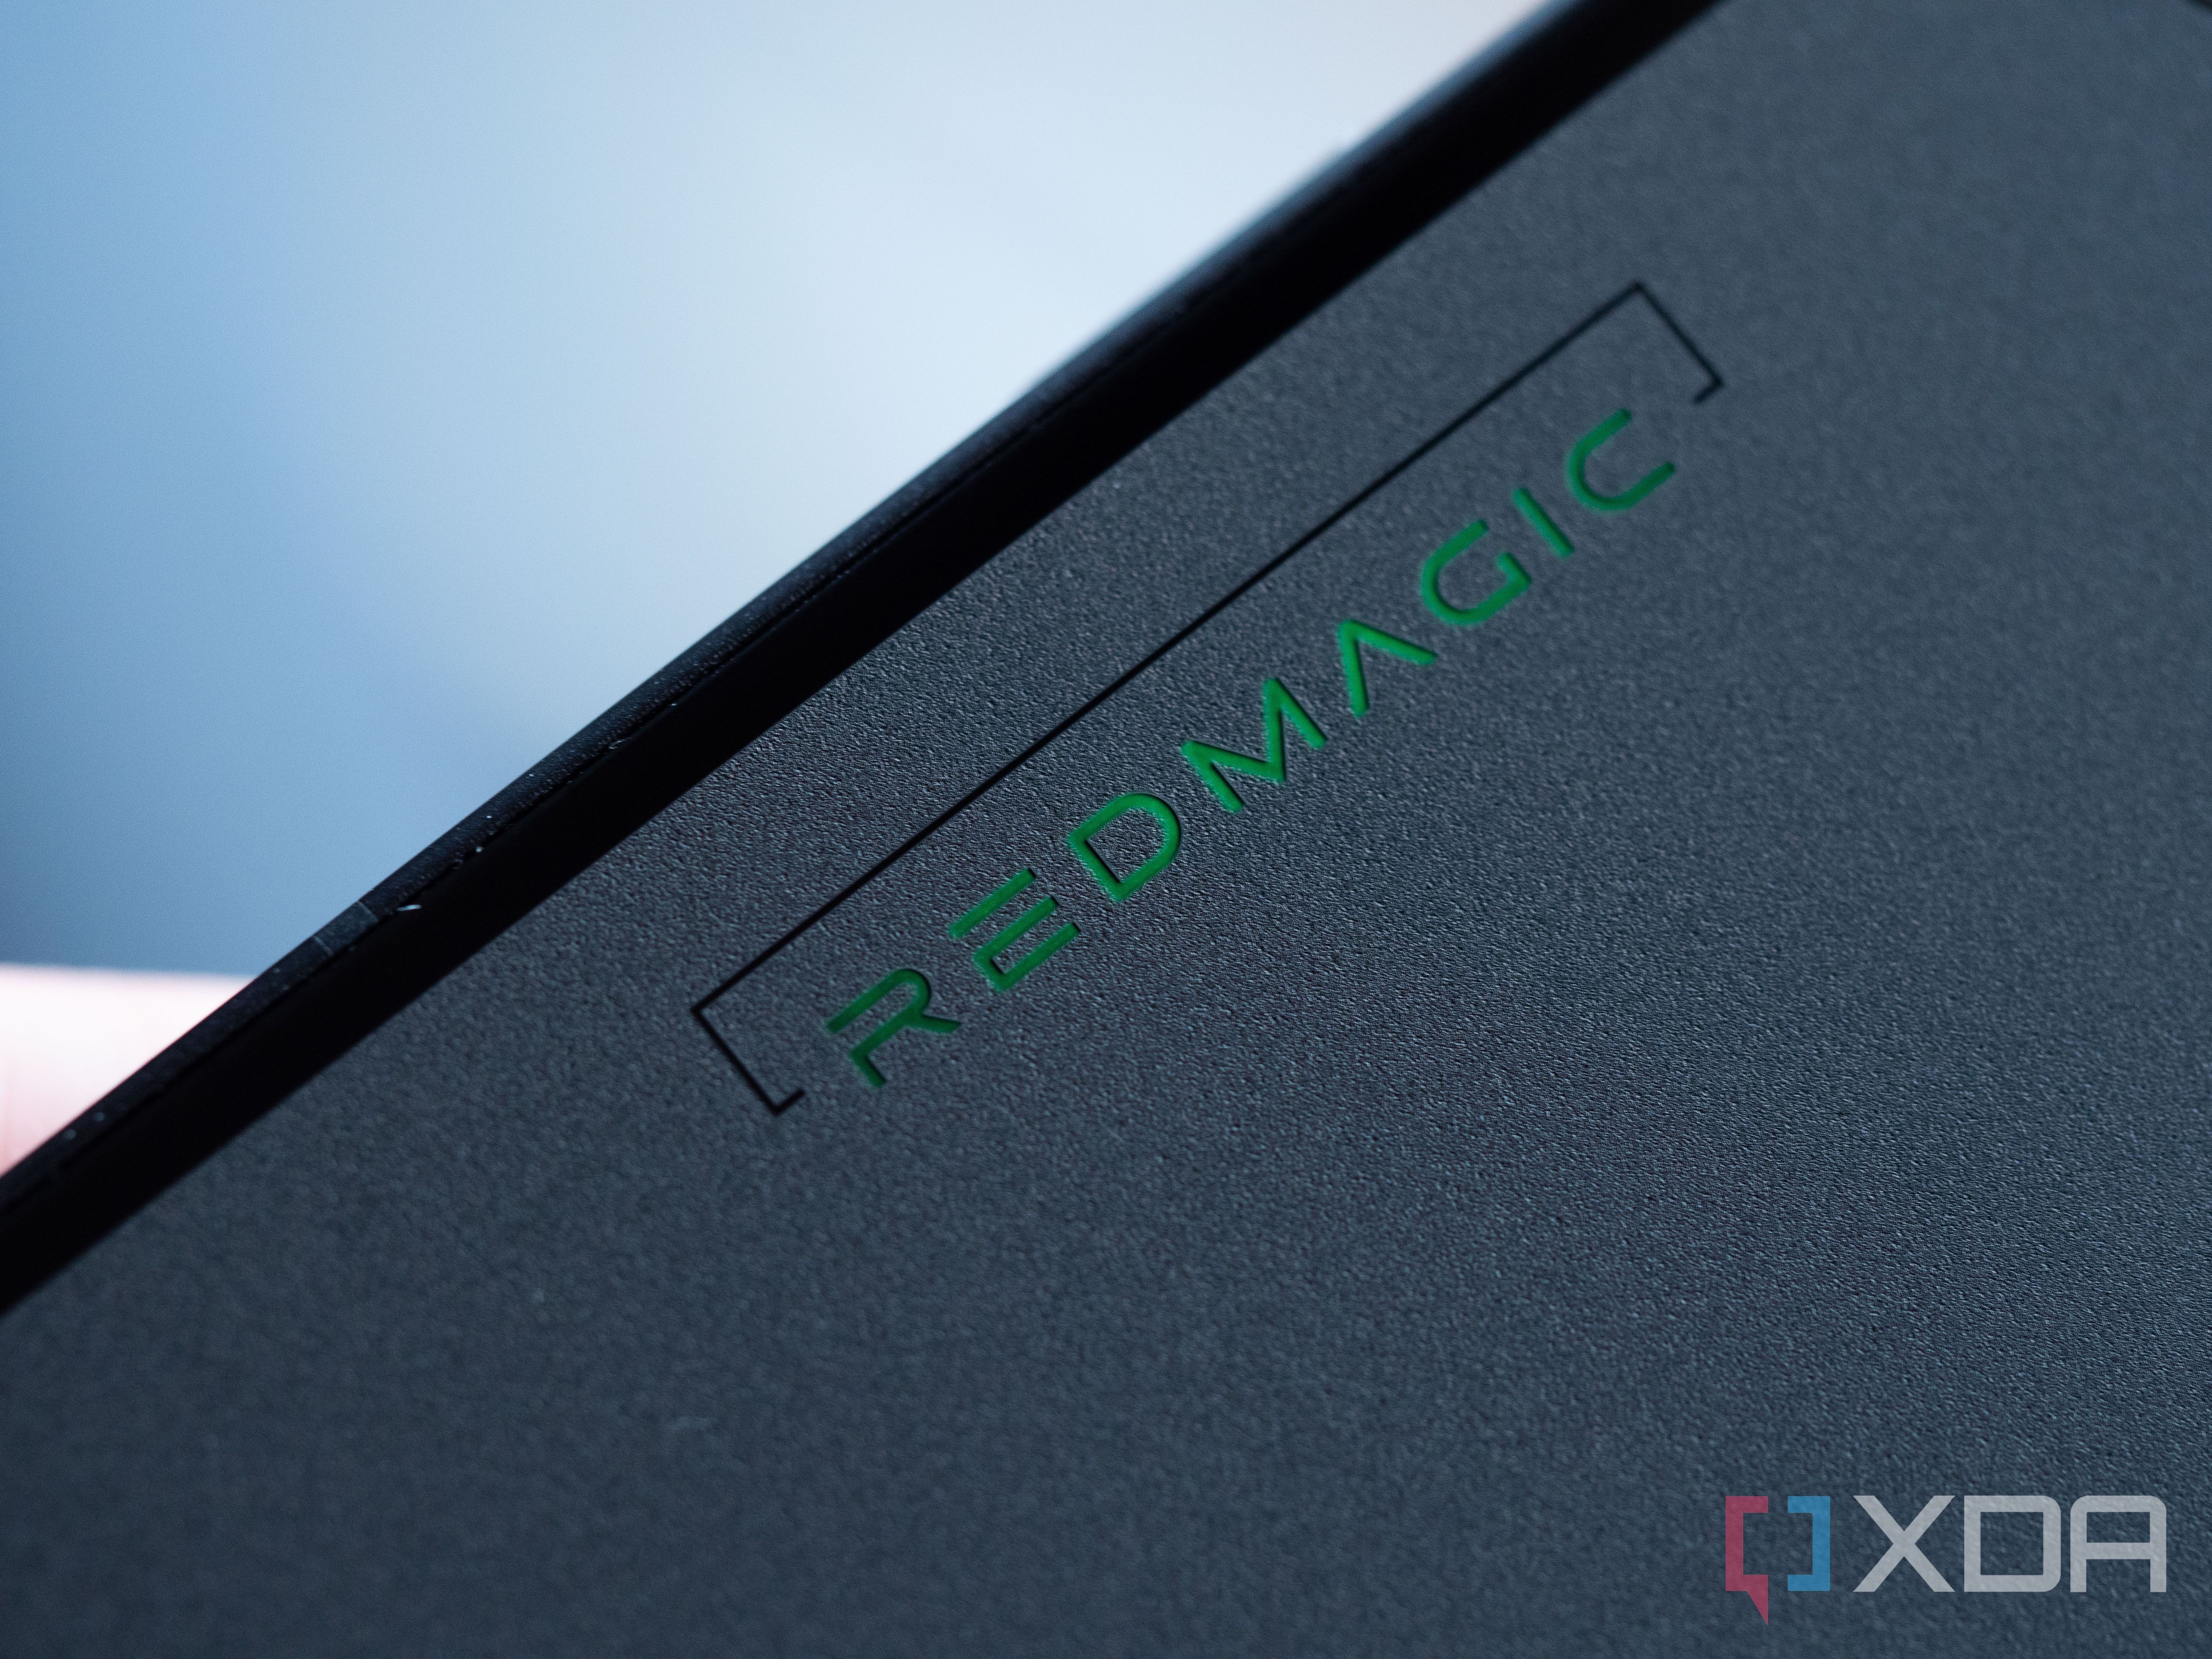 Redmagic 8 Pro review: Perfect performance, phenomenal price